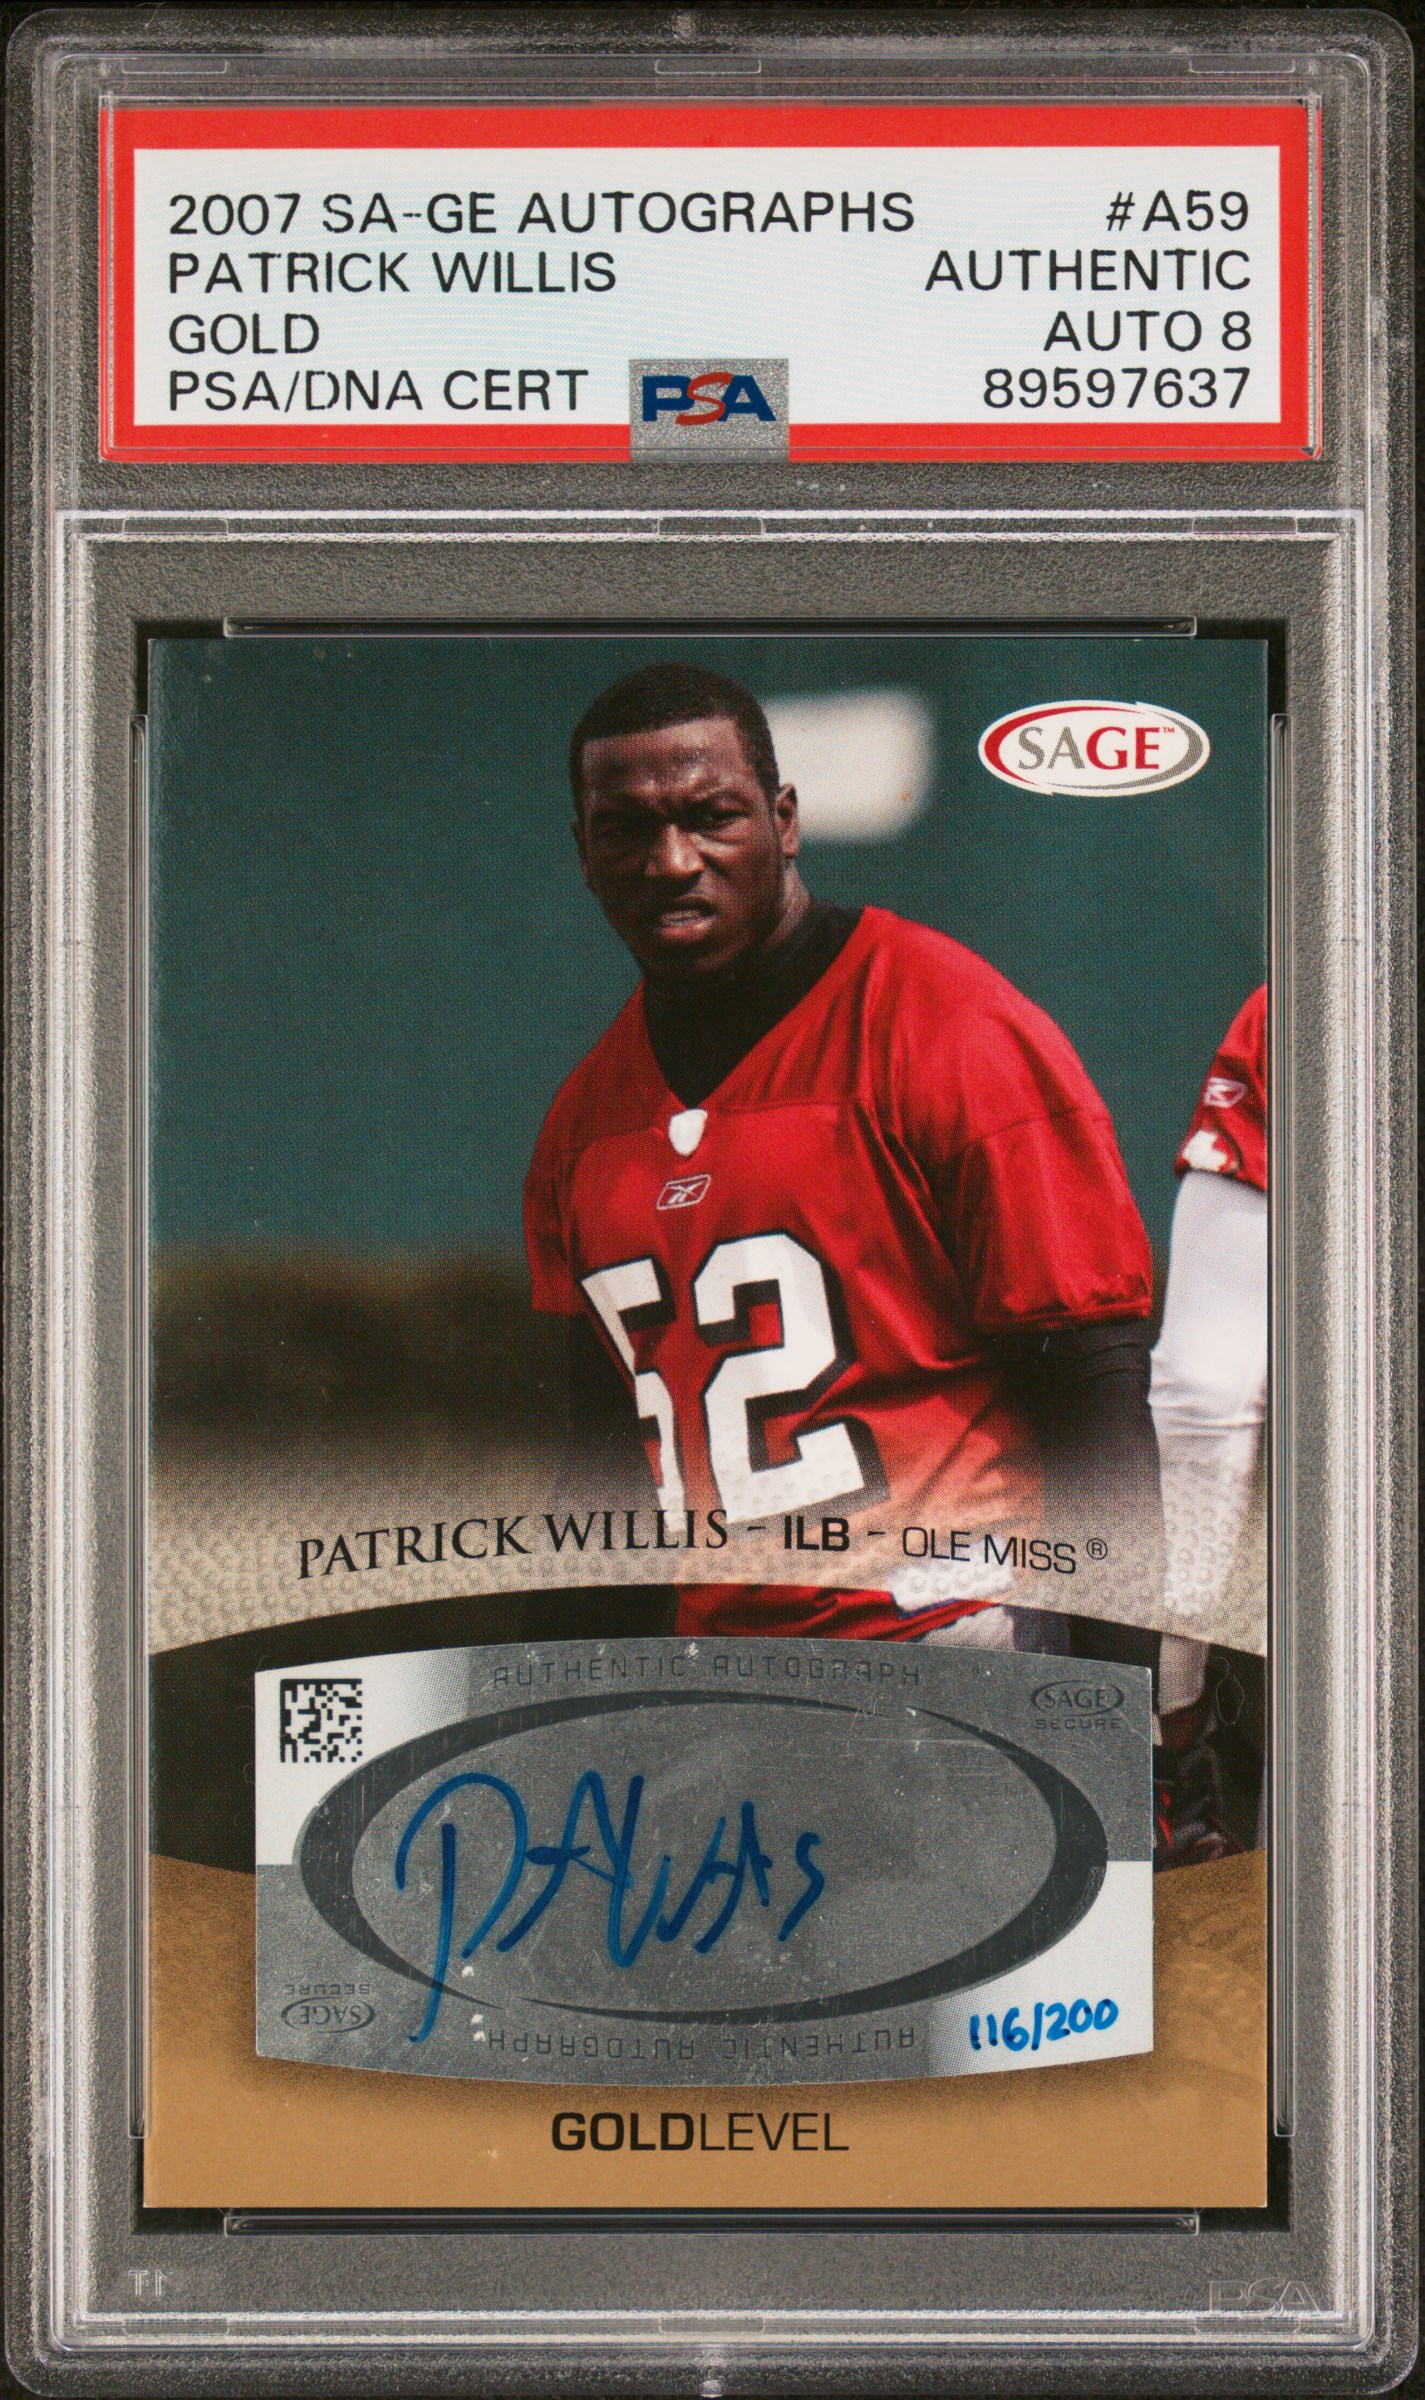 Patrick Willis 2007 SA-GE Autographs Gold Signed Rookie Card #A59 Auto PSA 8